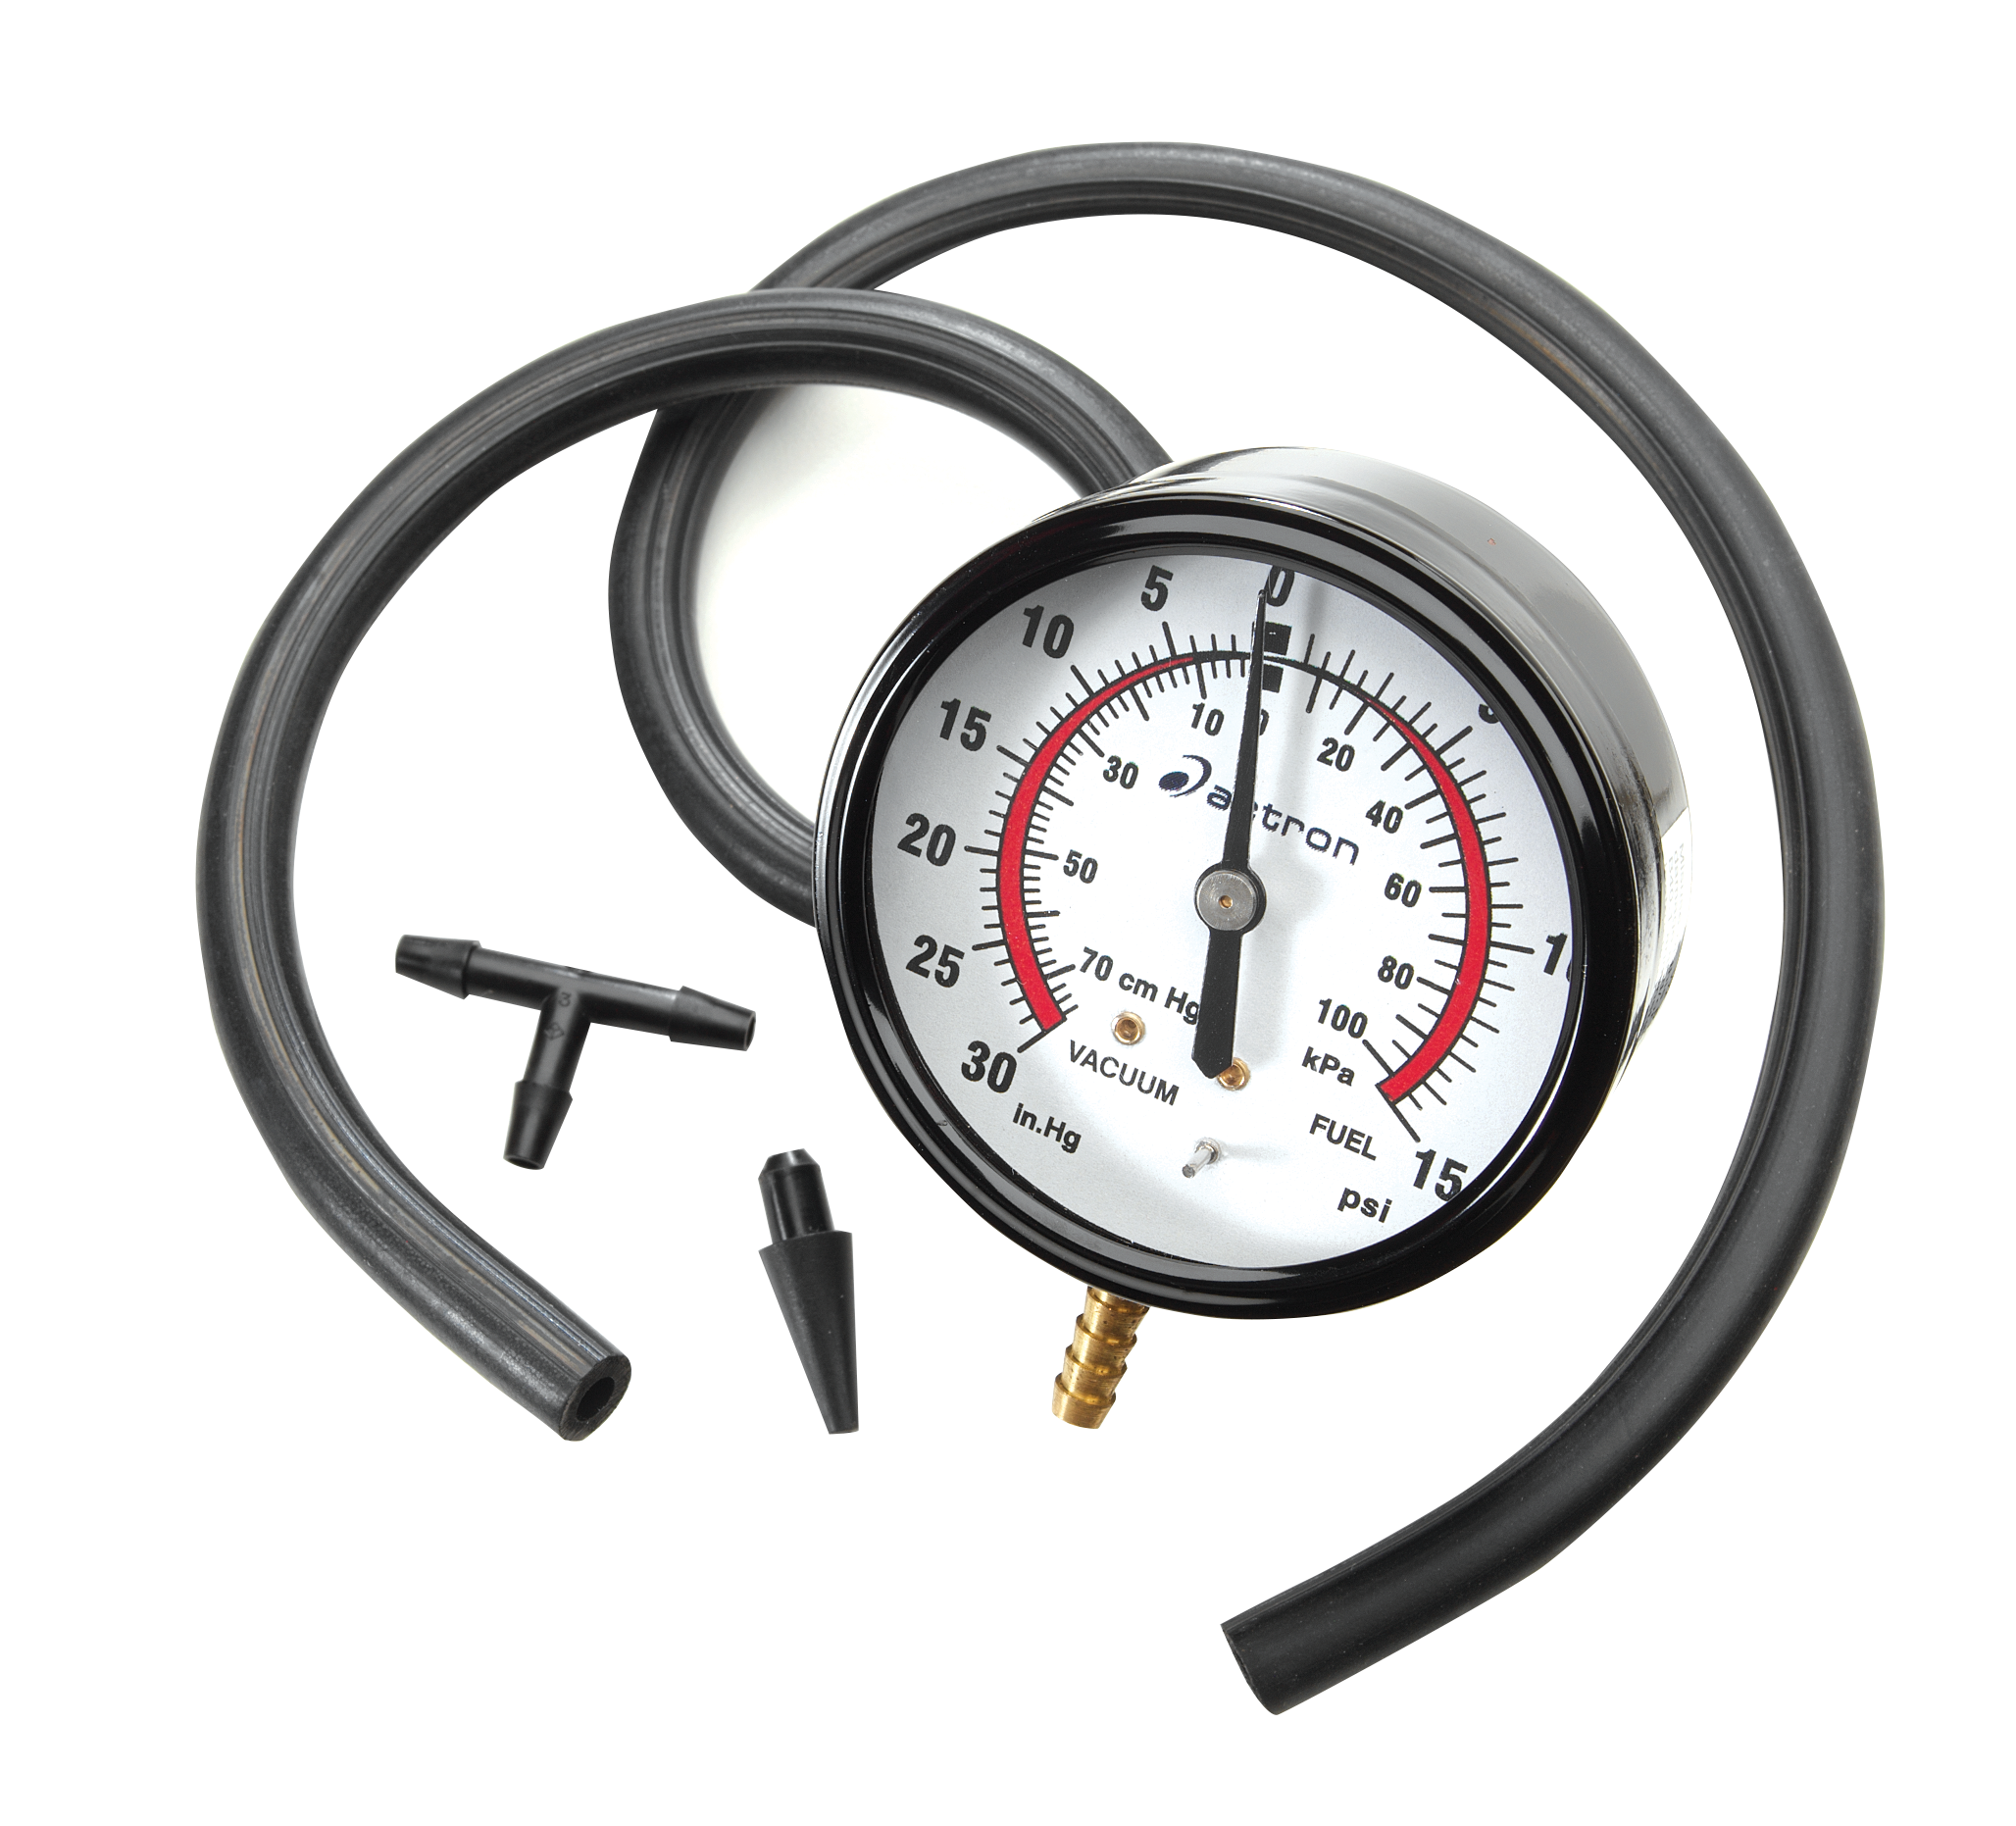 Details about   HFS R Carburetor Carb Valve Fuel Pump Pressure & Vacuum Tester Gauge Test Kit 